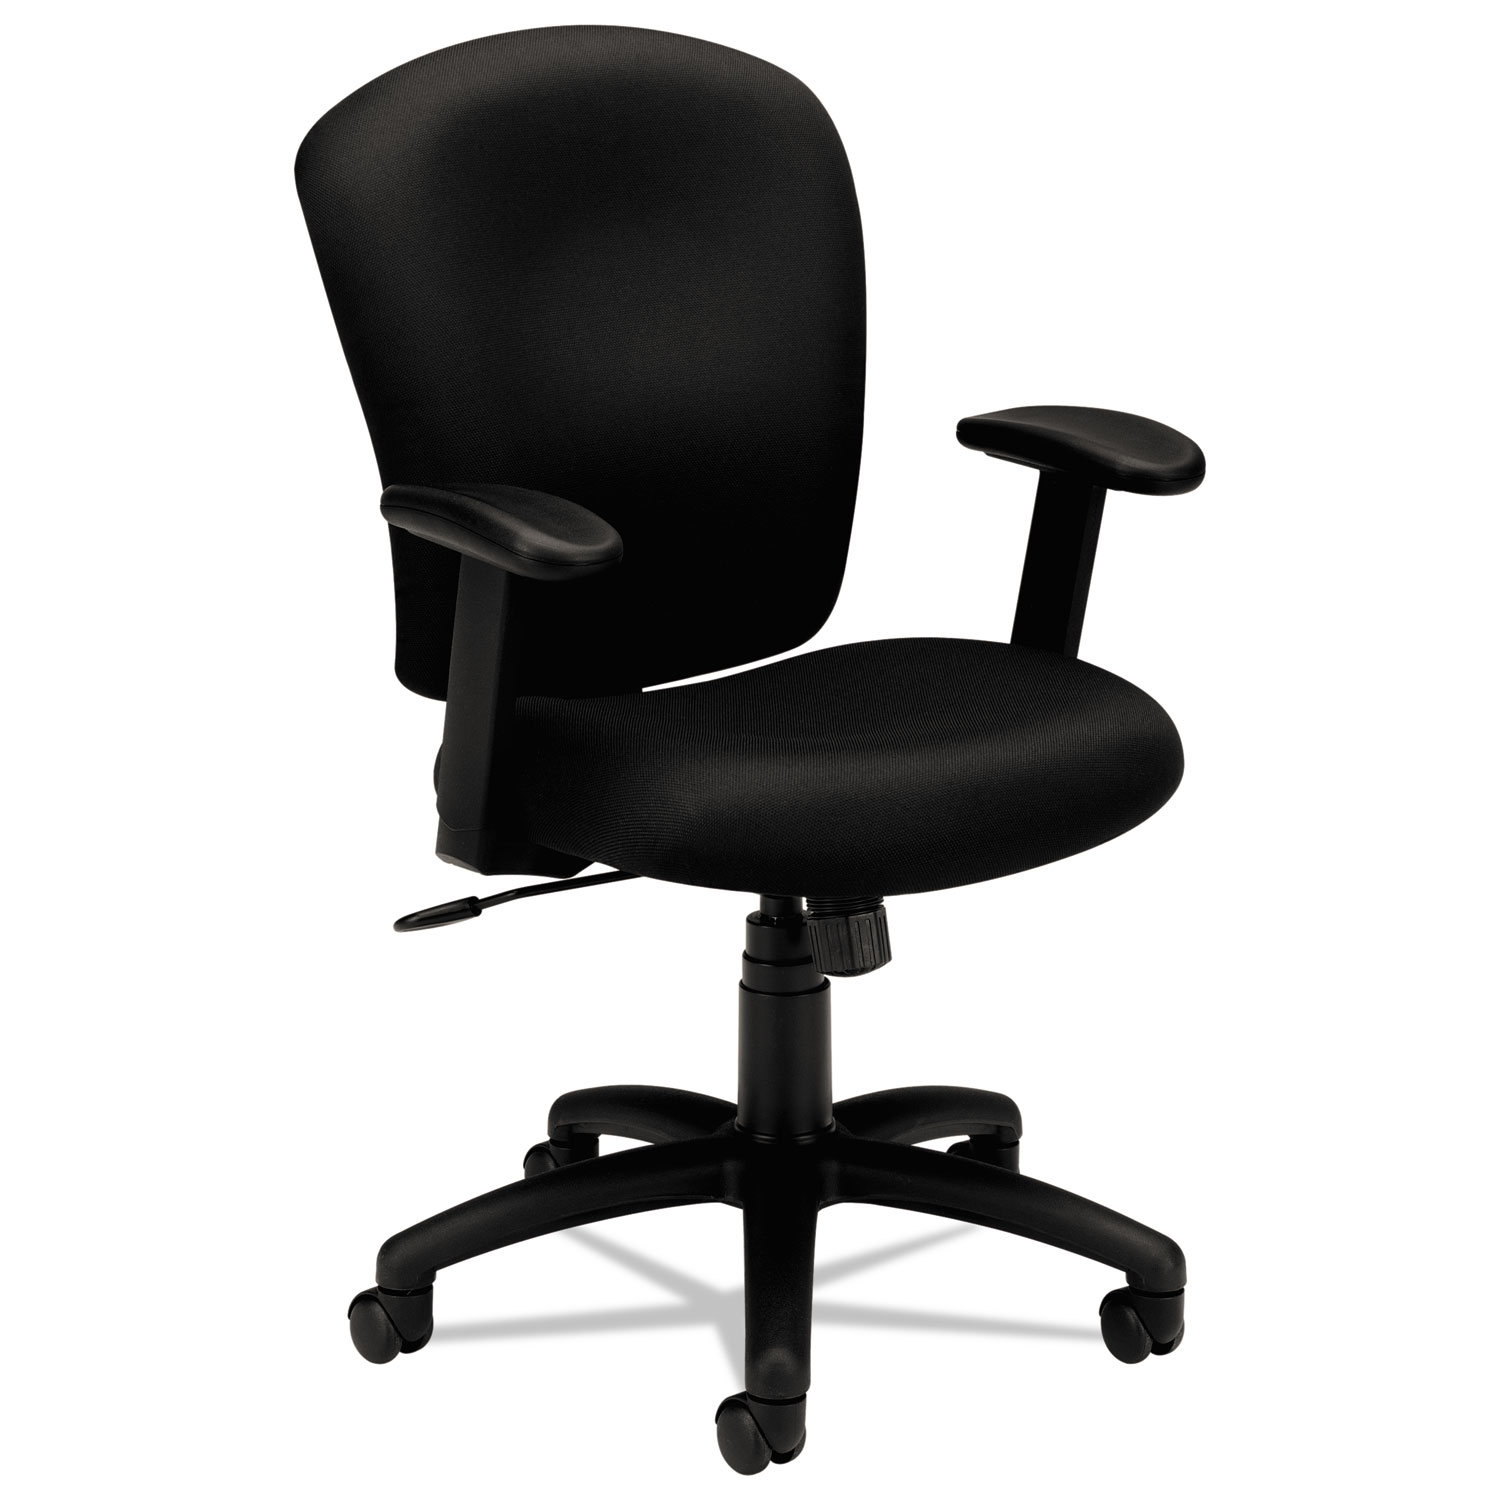  HON HVL220.VA10 HVL220 Mid-Back Task Chair, Supports up to 250 lbs., Black Seat/Black Back, Black Base (BSXVL220VA10) 